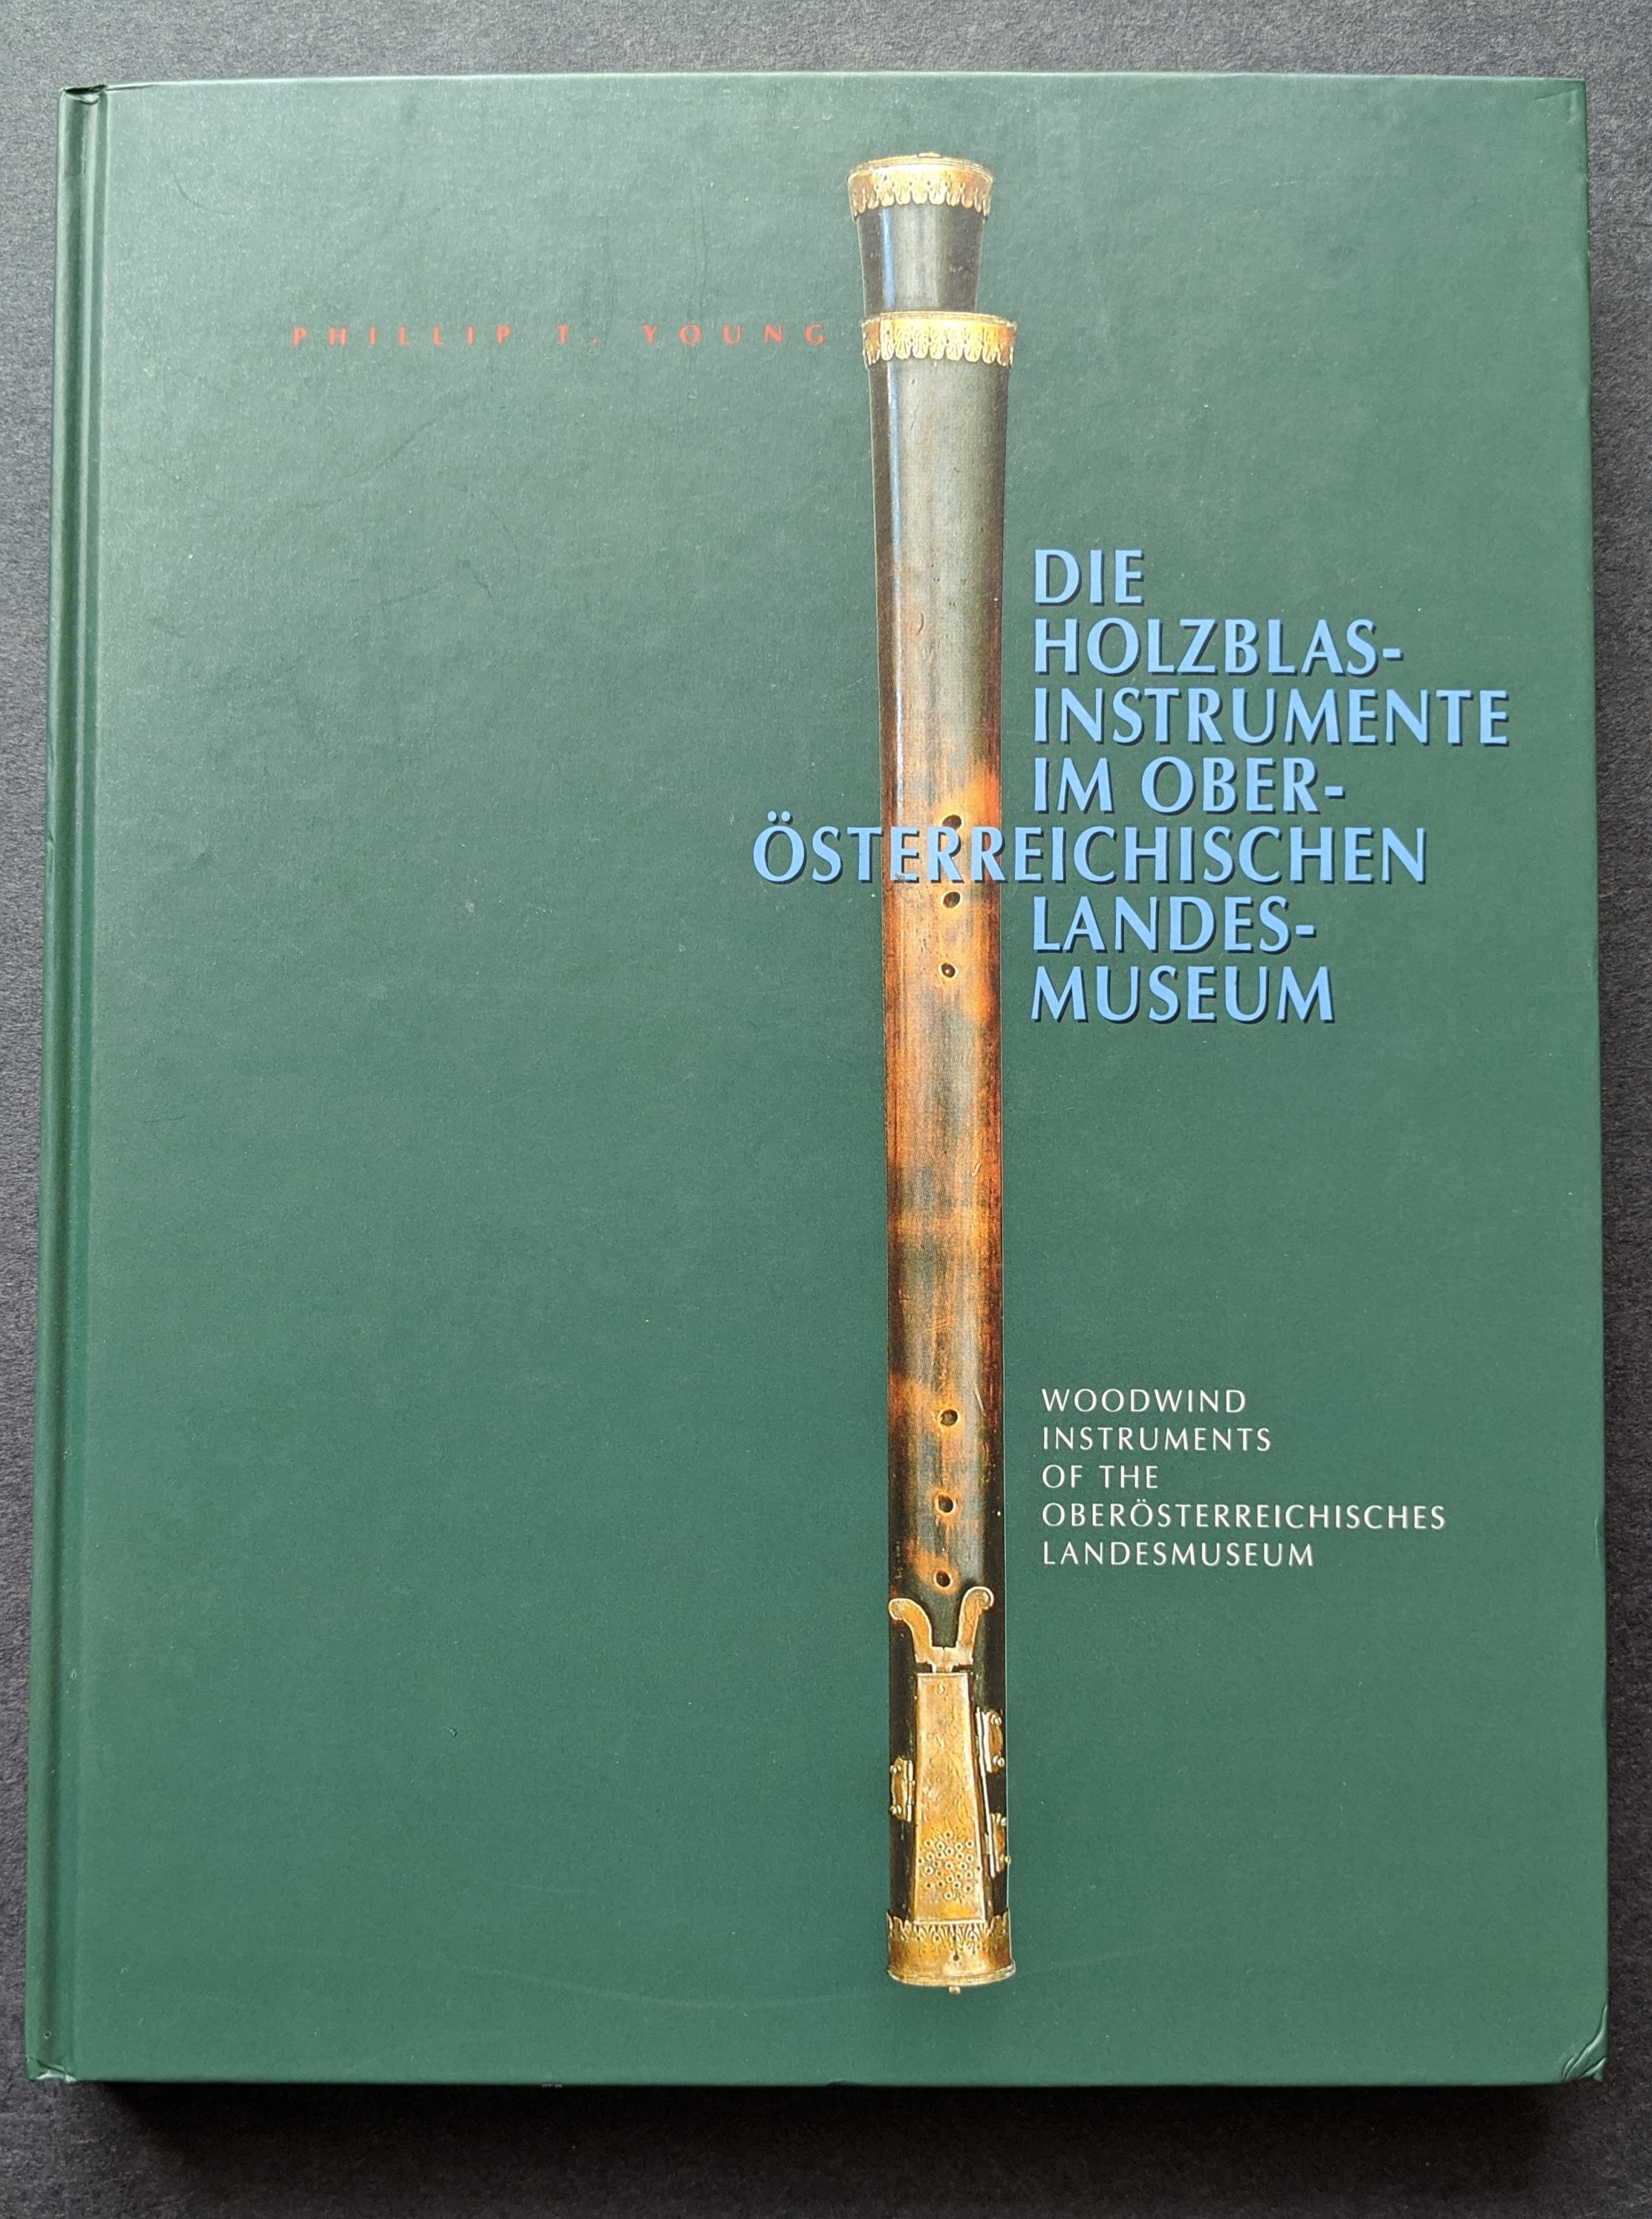 Landesmuseum Woodwind Instruments of the Oberösterreichisches Landesmuseum (Die Holzblasinstrumente im Oberösterreichischen Landesmuseum). - Young, Phillip T. (Author's copy)